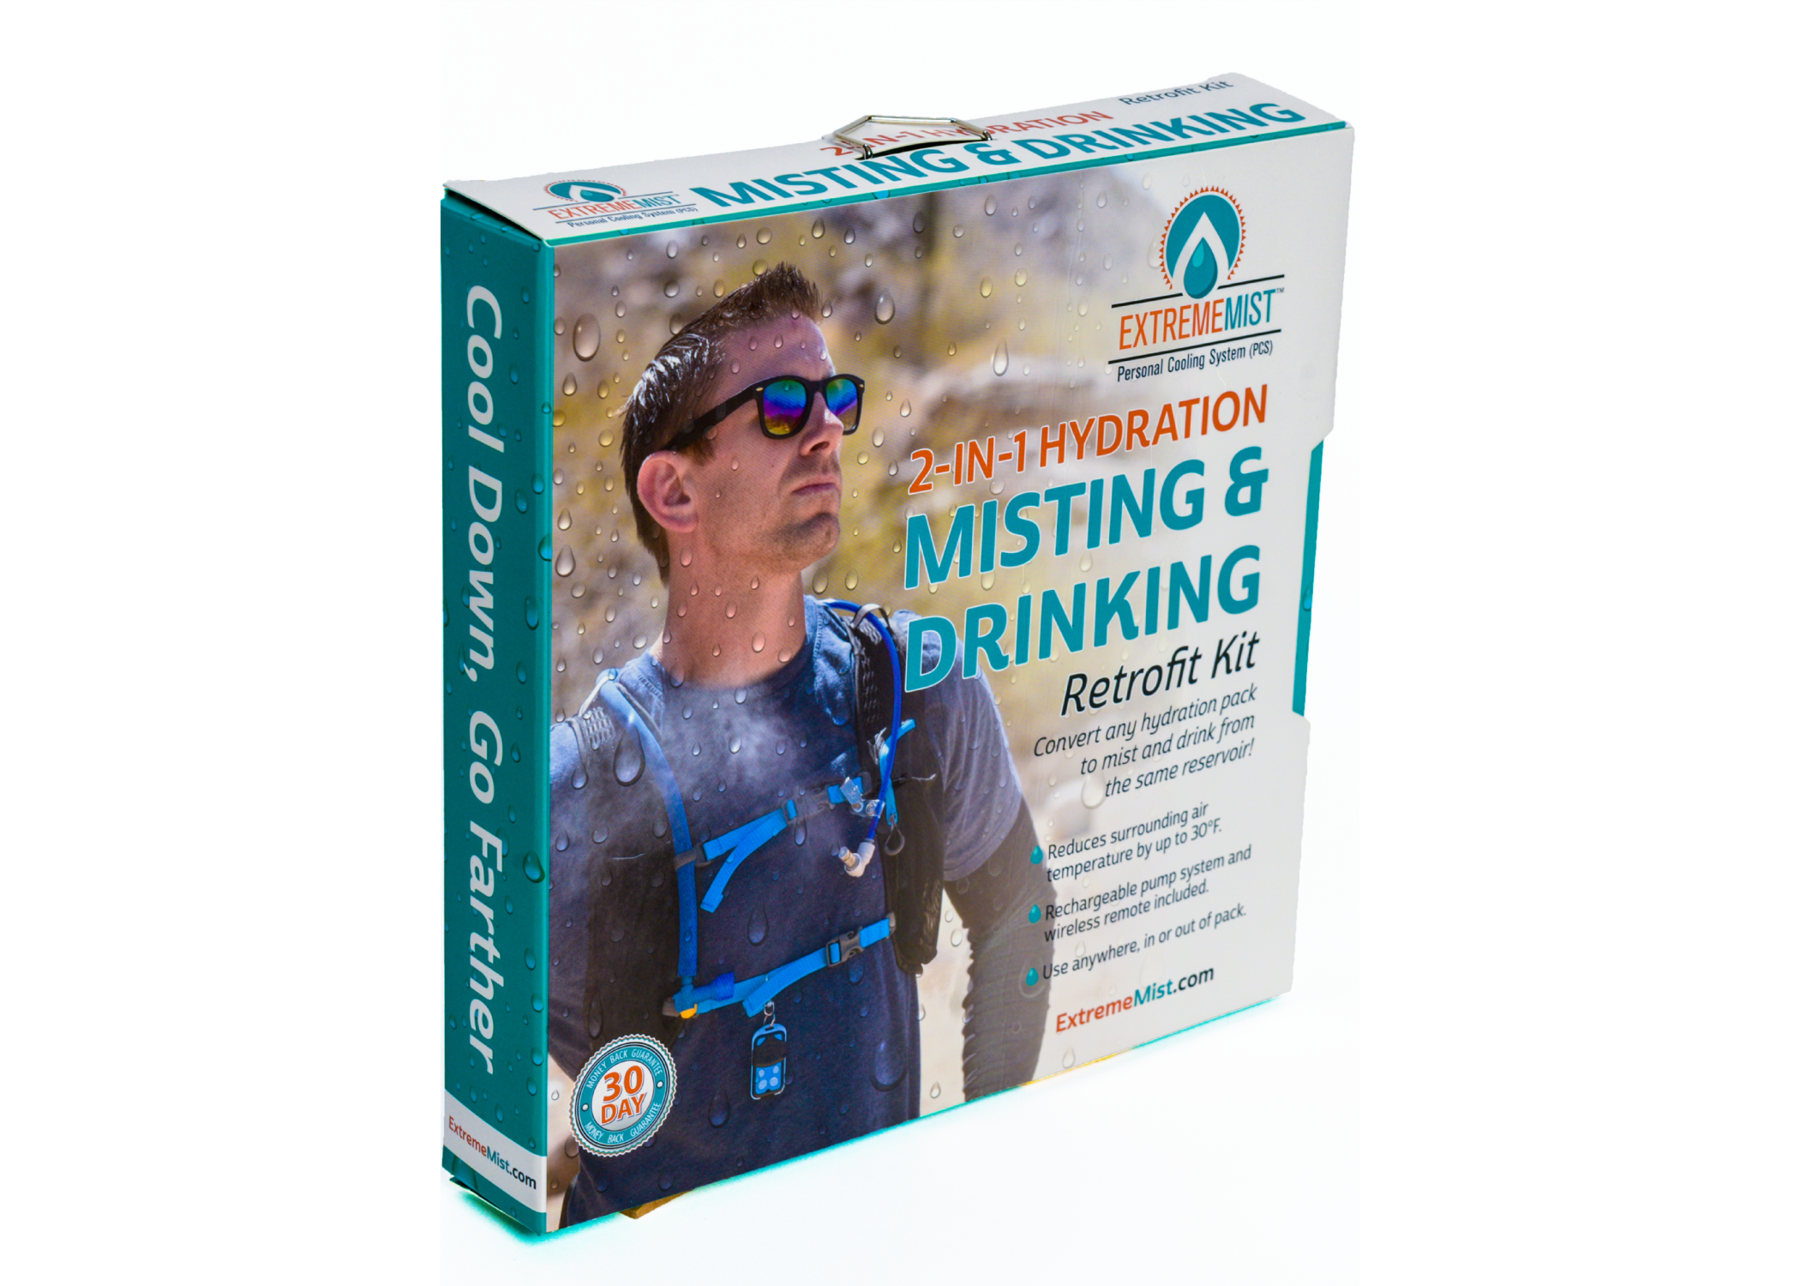 Extrememist Backpack Misting and Drinking Retrofit Kit